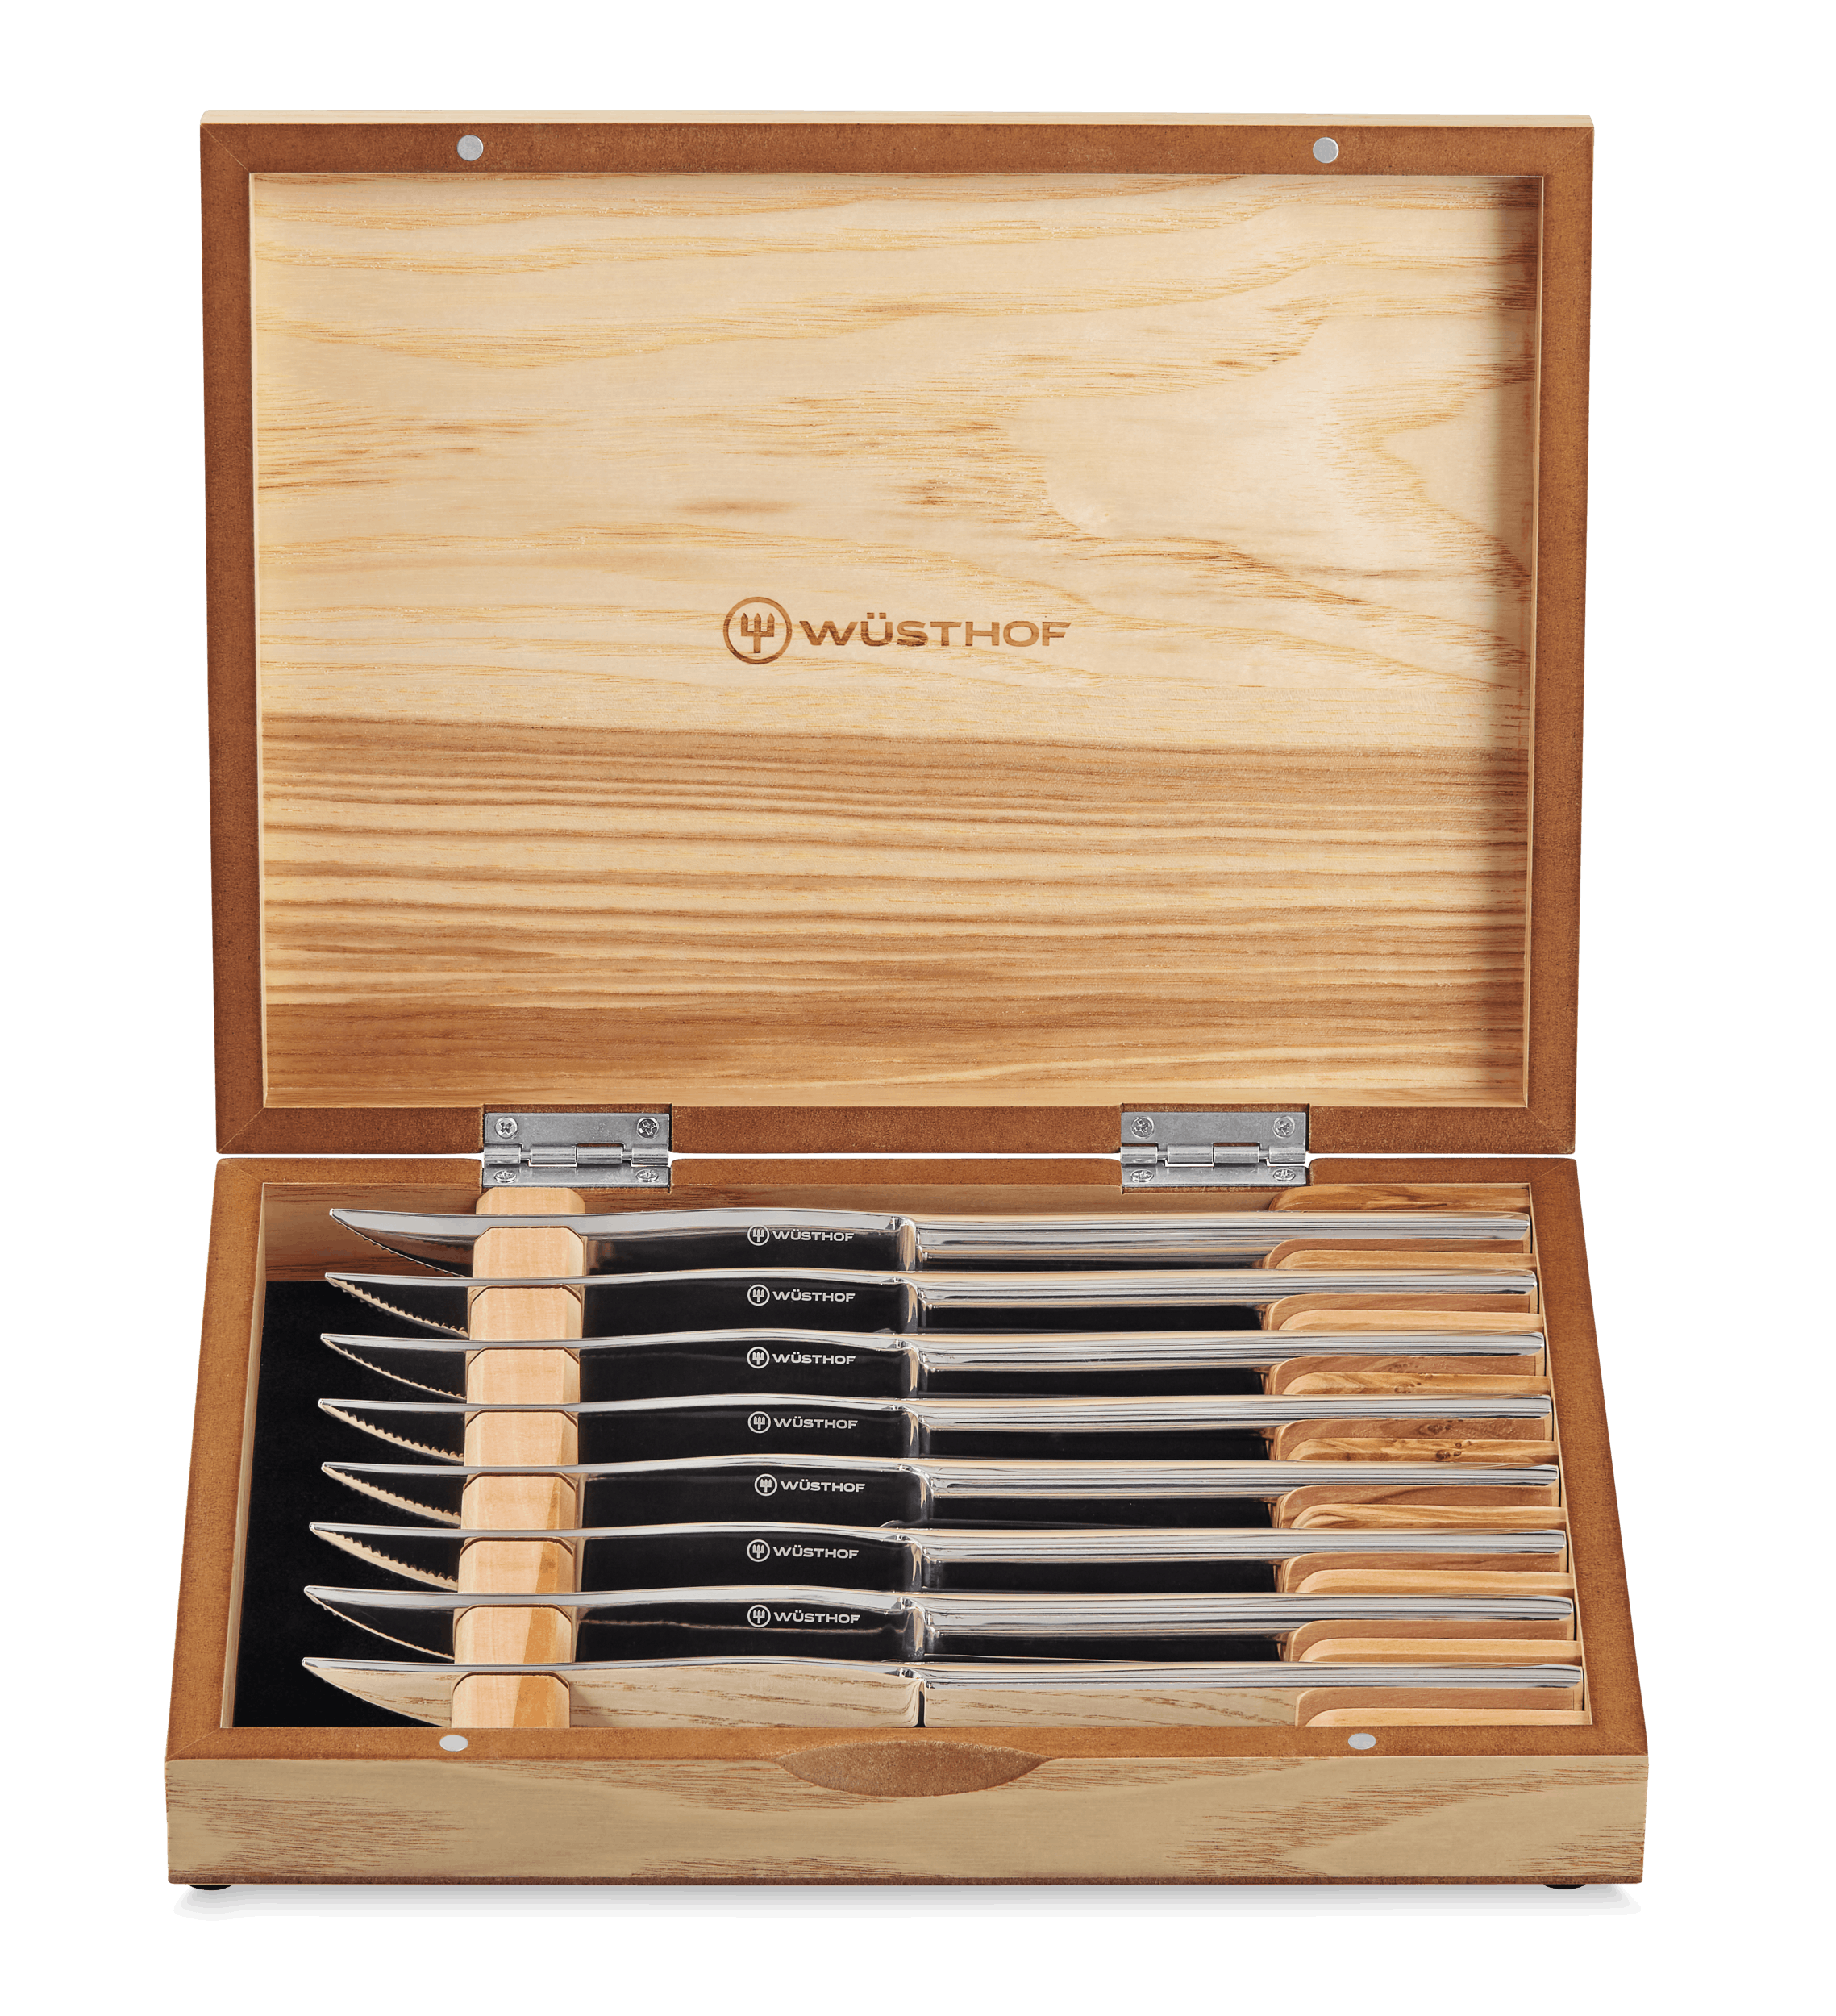 WÜSTHOF 8-Piece Stainless Steel Steak Knife Set | Olivewood